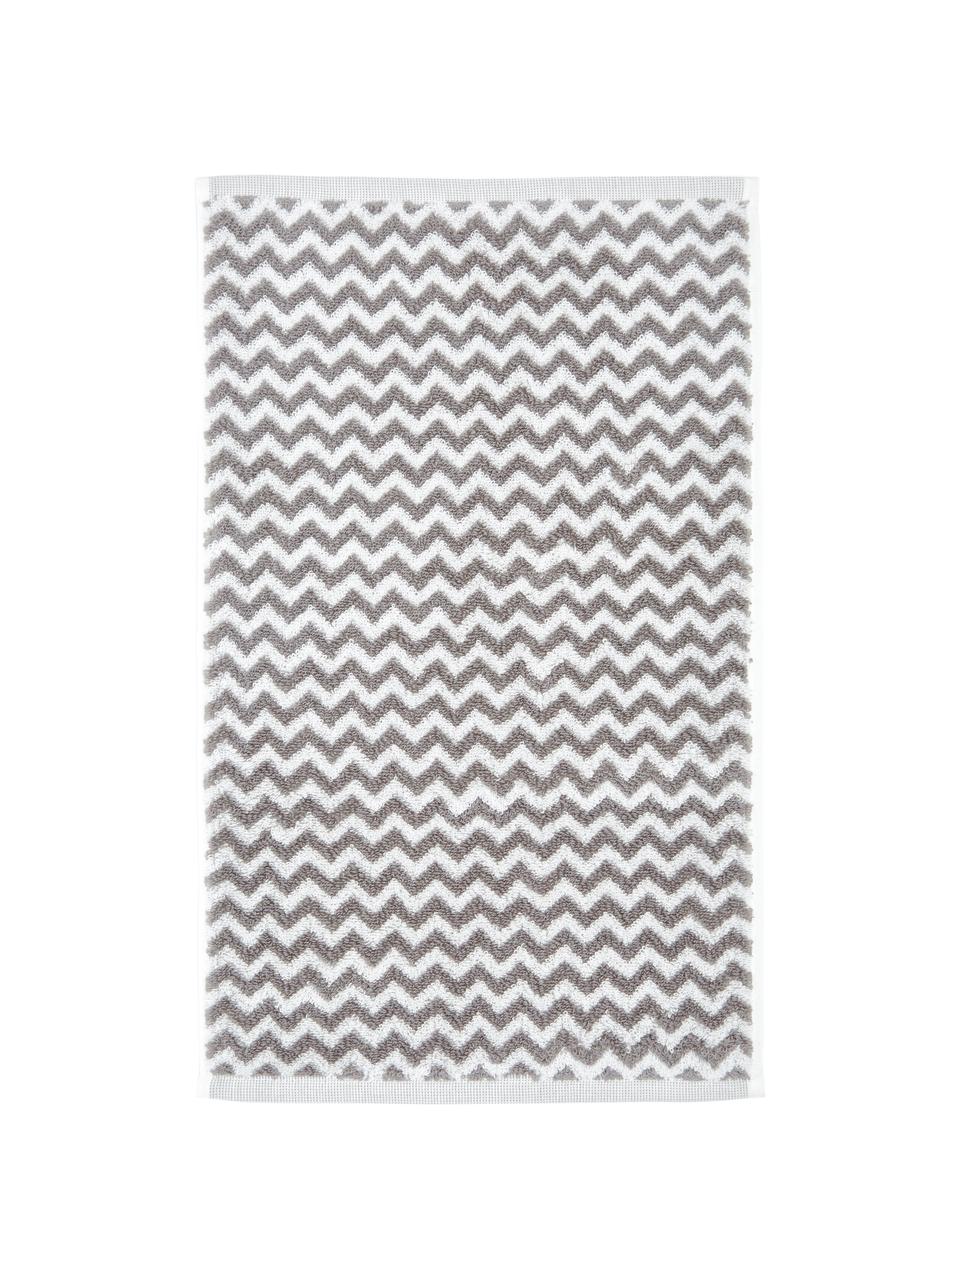 Asciugamano con motivo a zigzag Liv 2 pz, 100% cotone,
qualità media 550 g/m², Taupe, bianco, Asciugamano per ospiti, Larg. 30 x Lung. 50 cm, 2 pz